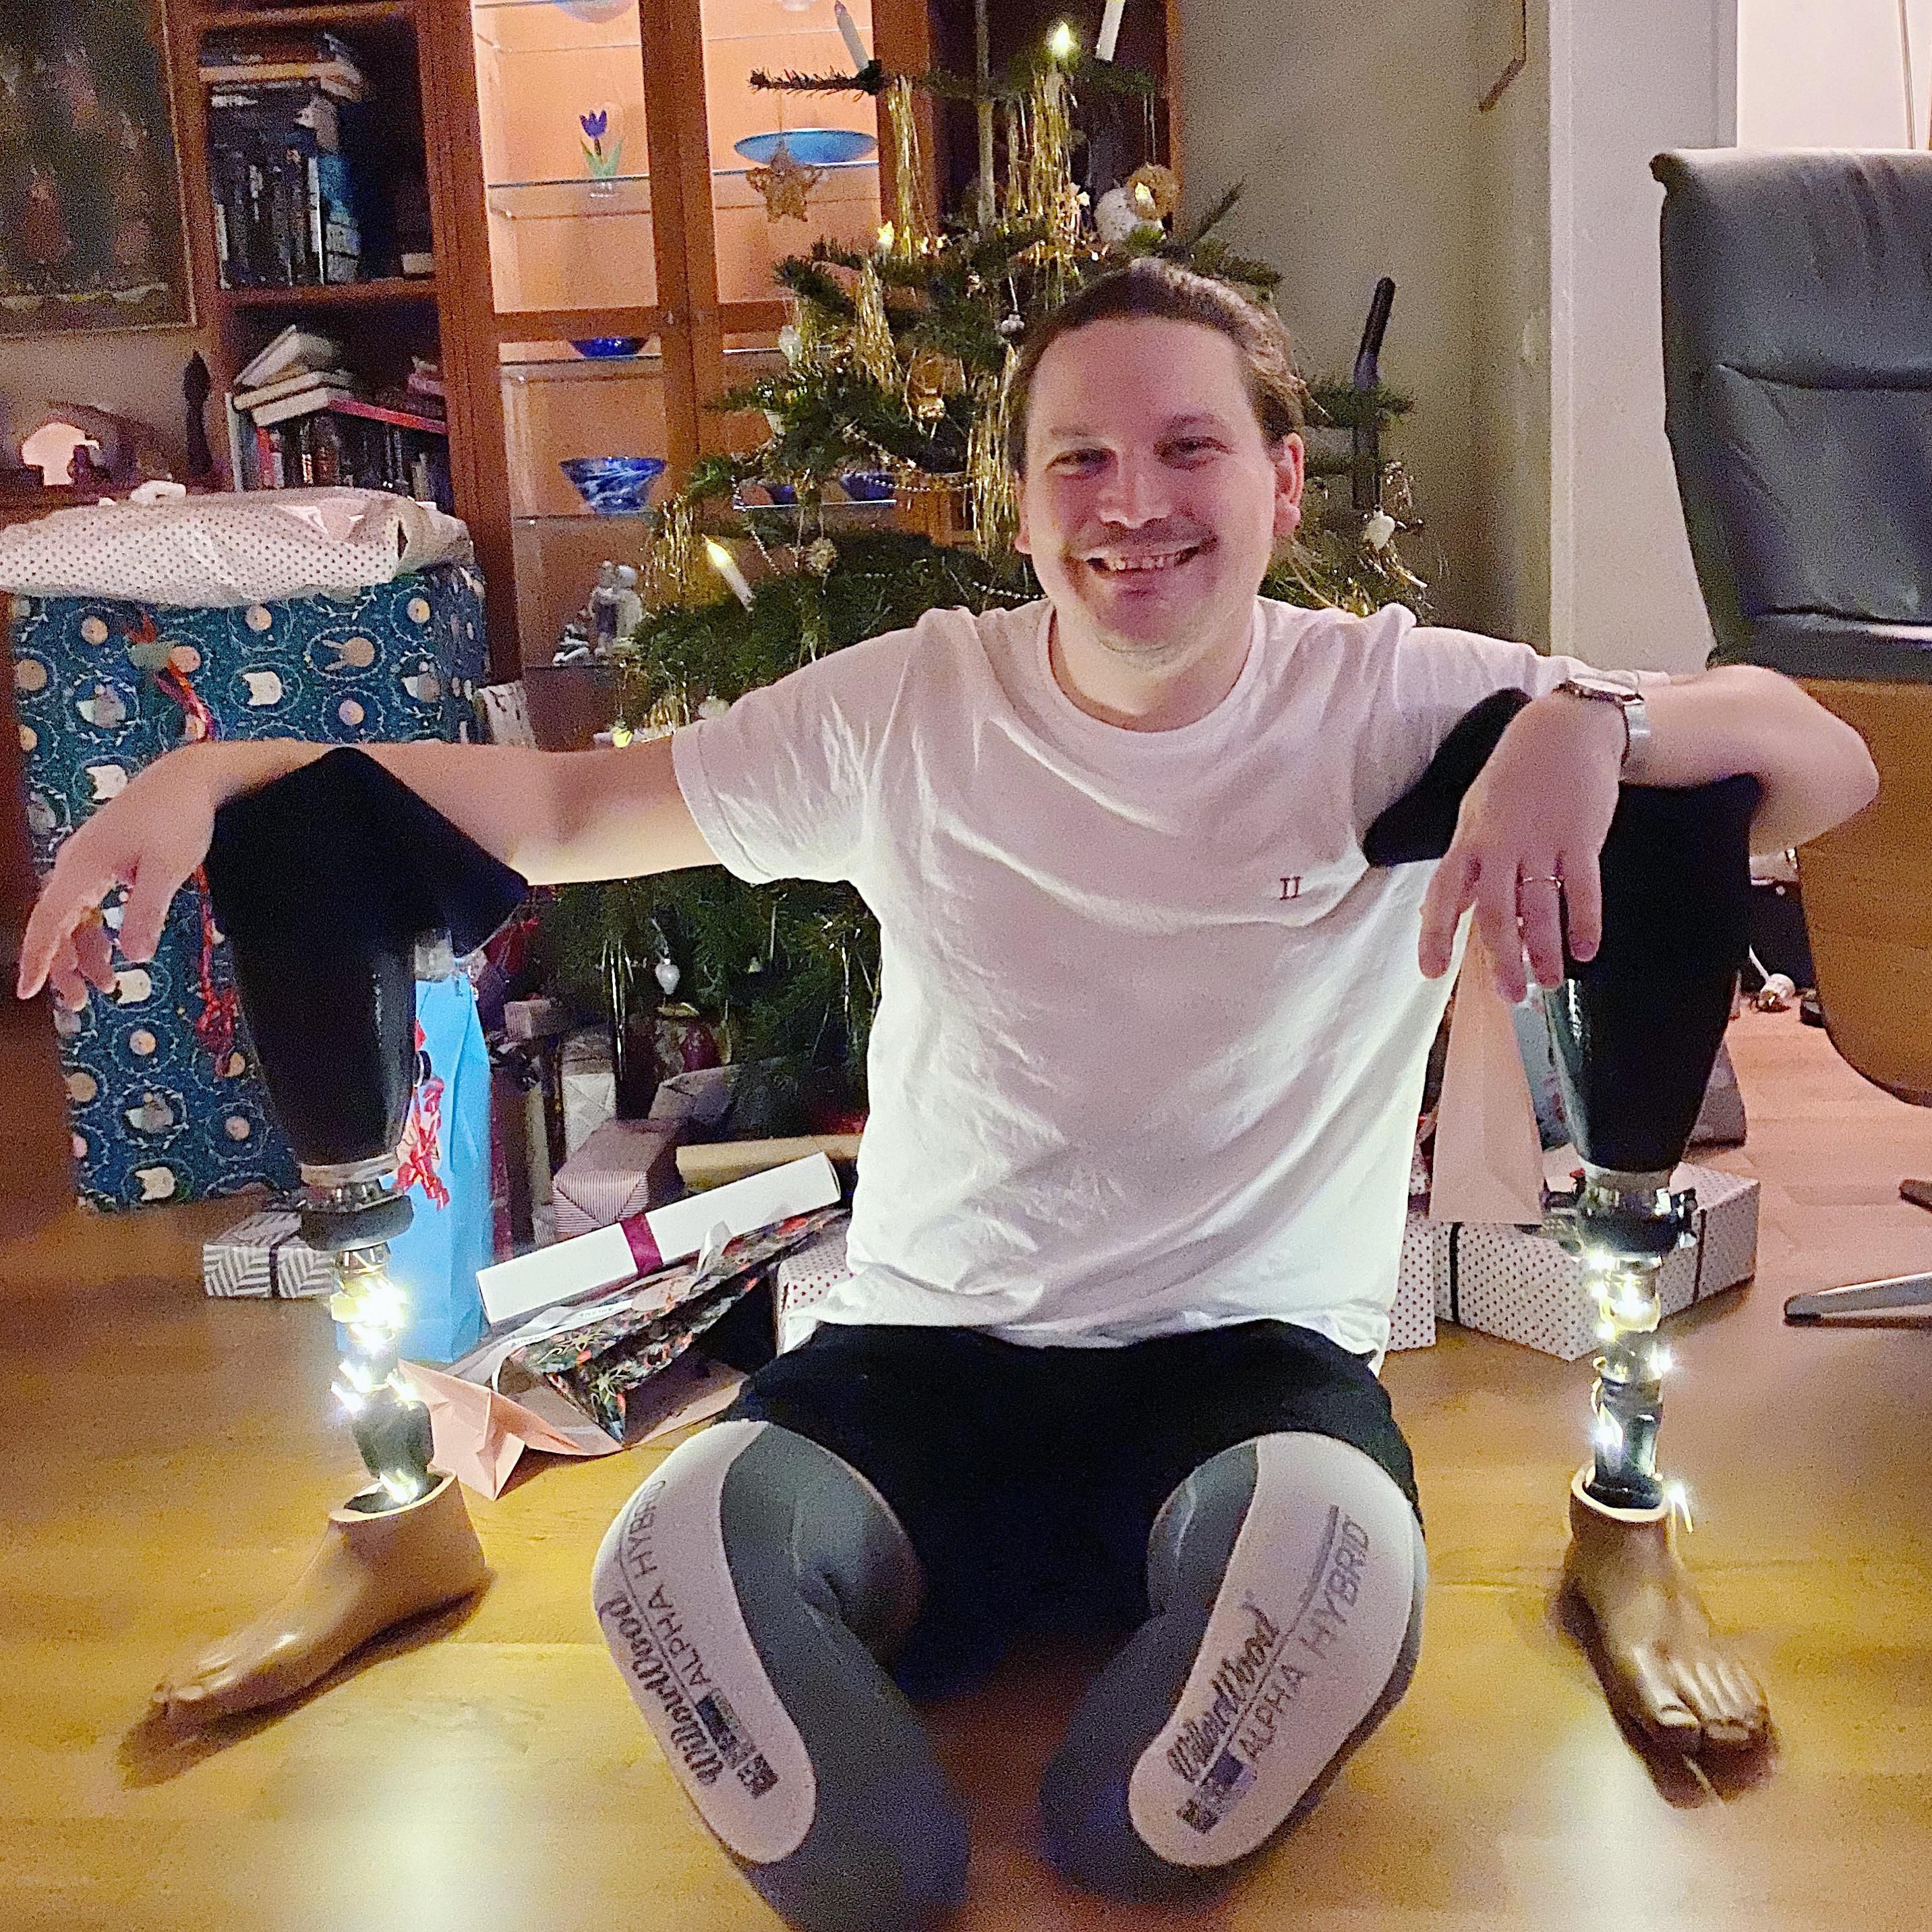 I saw your festive leg, so I though I’d share my festive legs from Christmas Eve! Happy holidays.